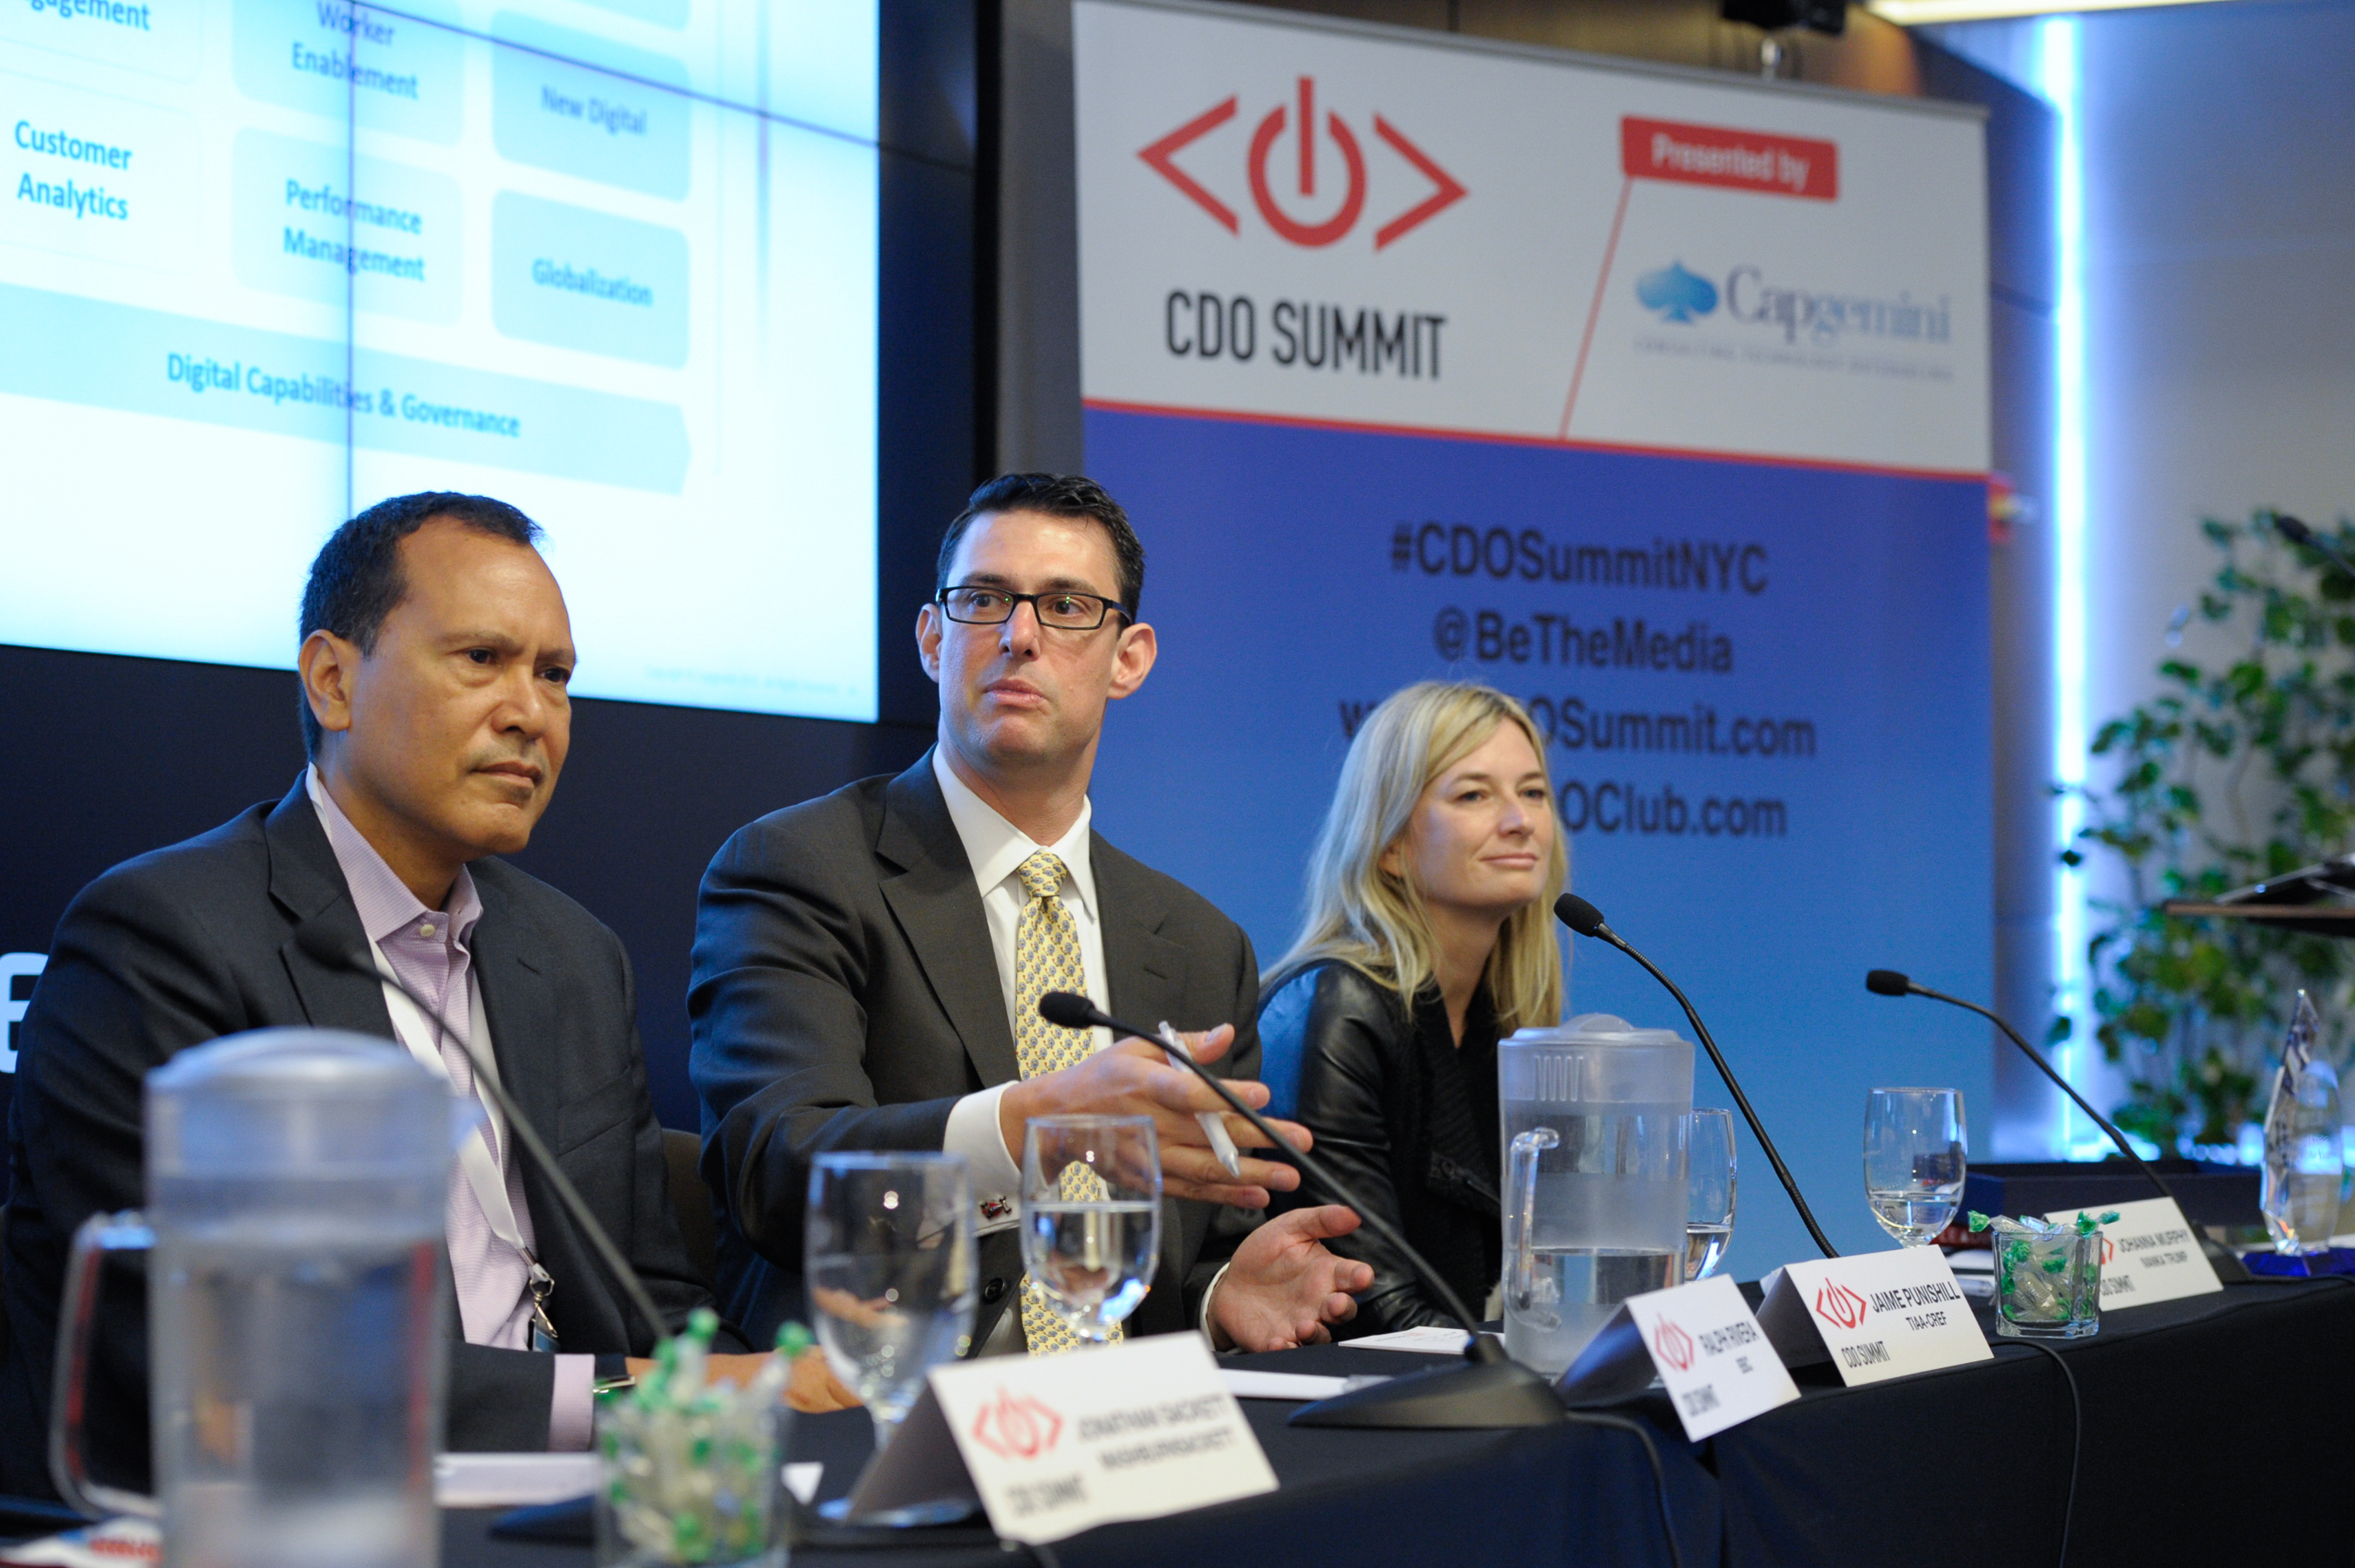 CDO Summit